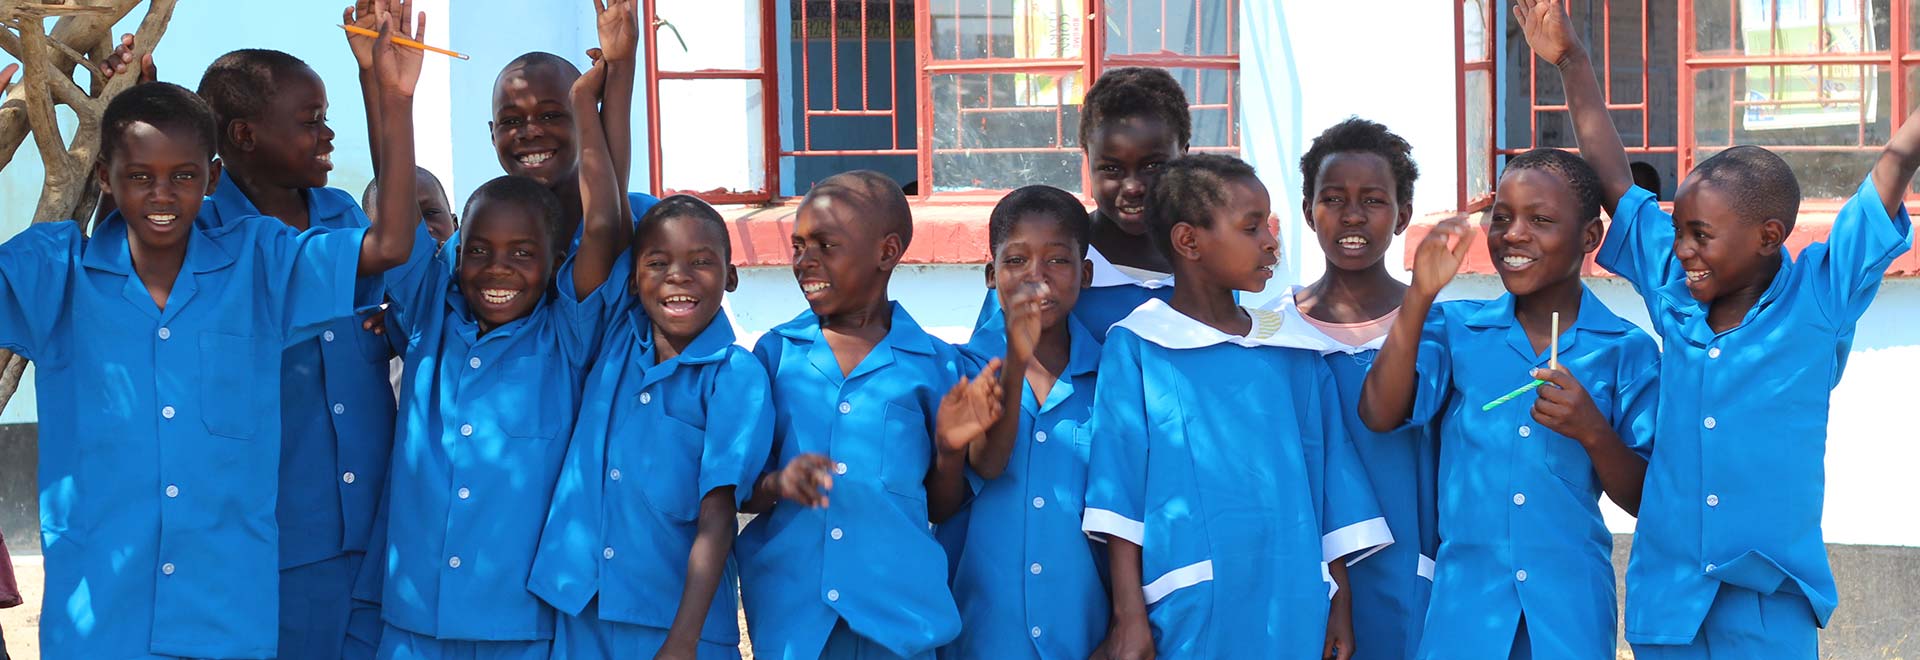 AKP Botswana Nakatindi School Children m